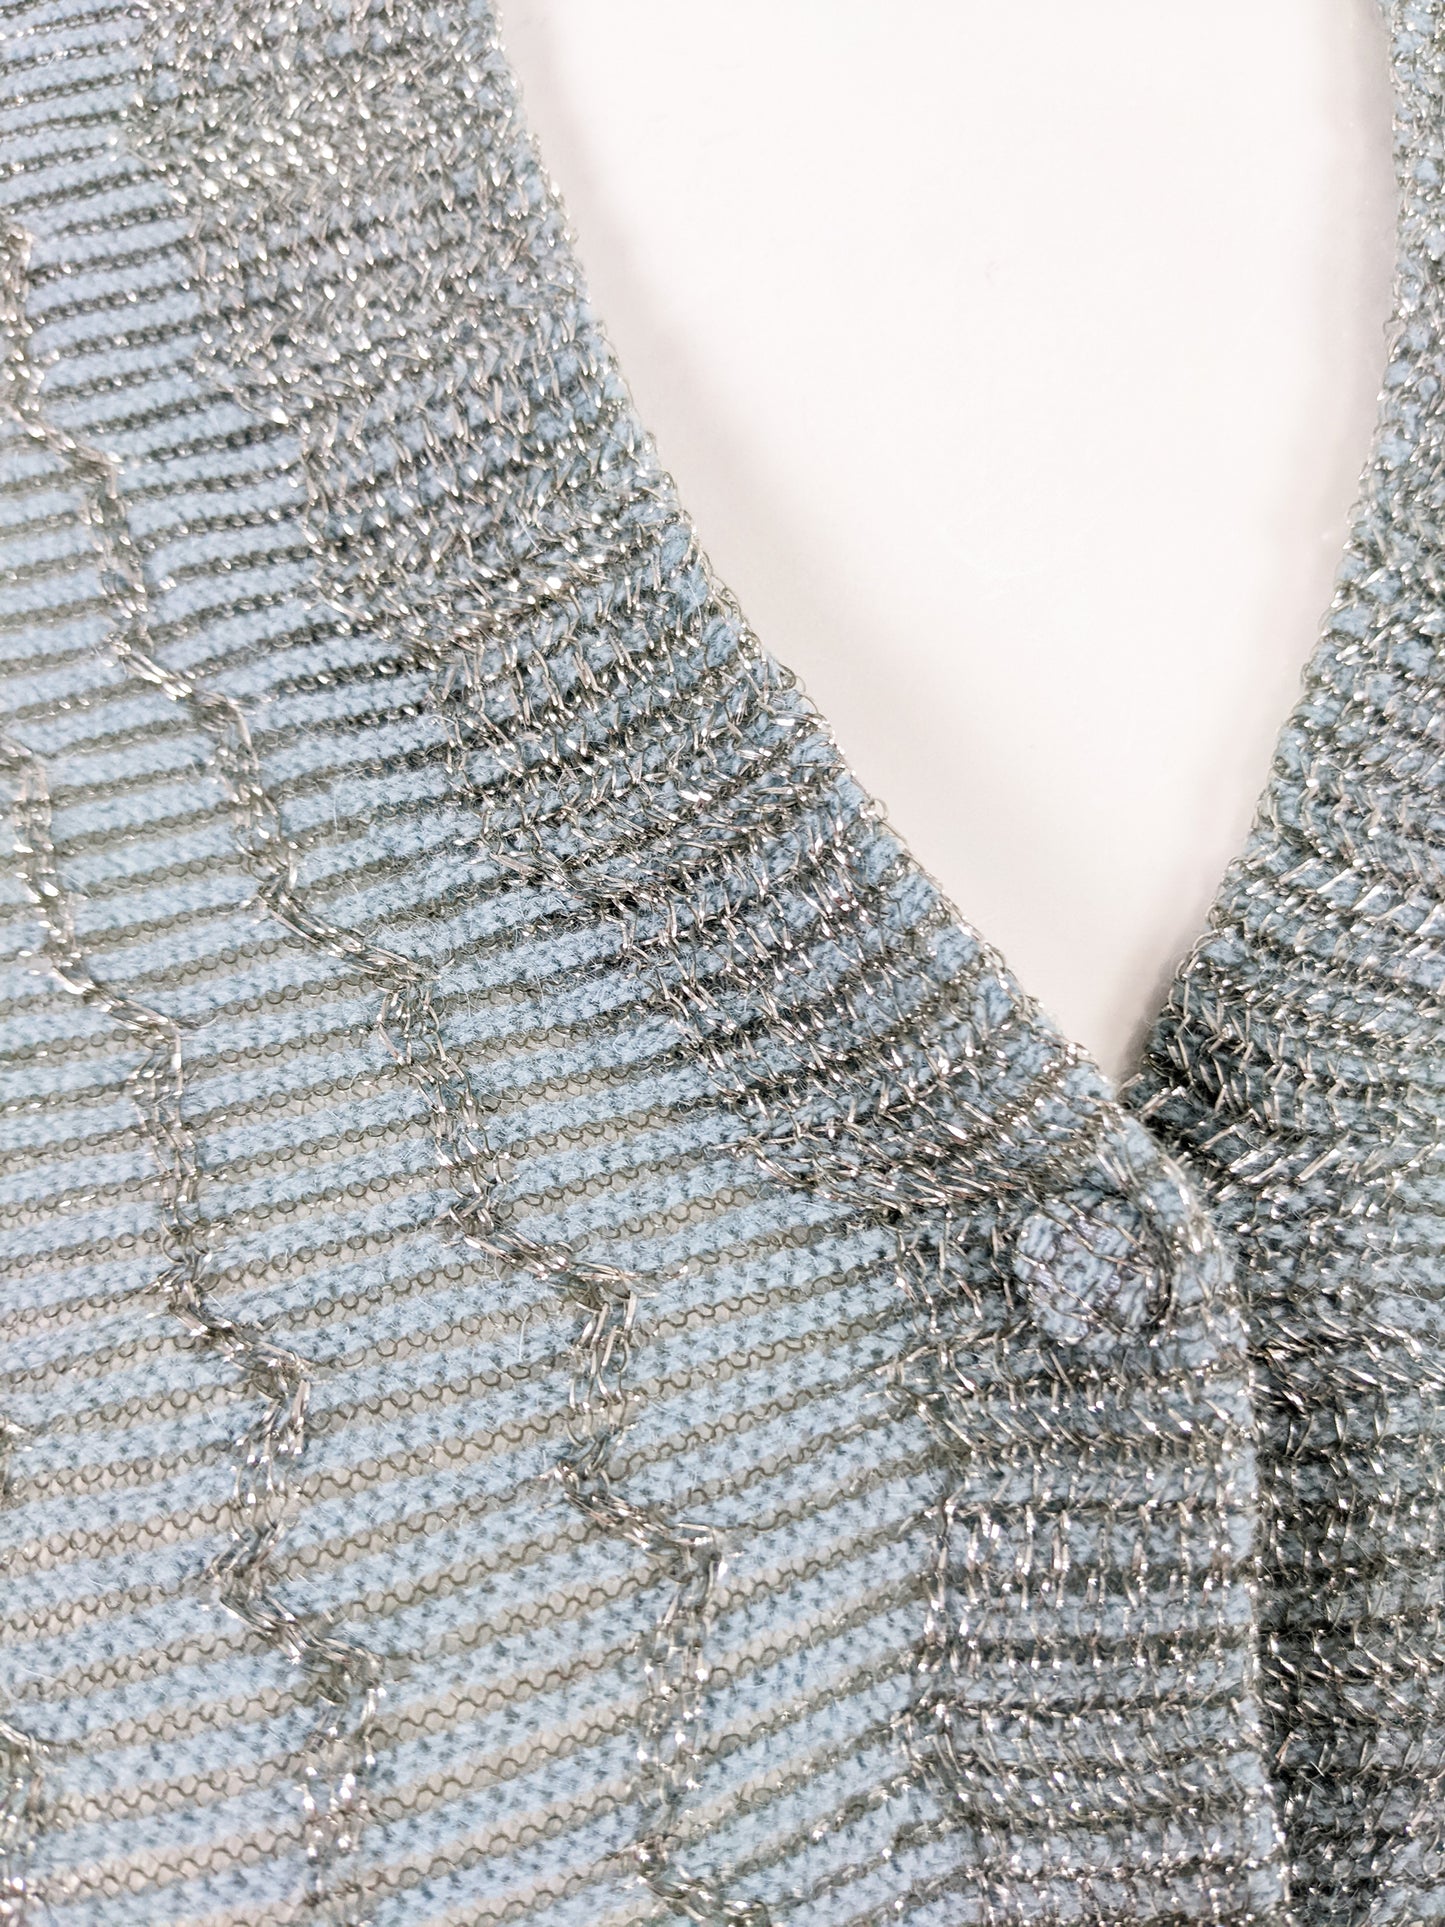 Luisa Spagnoli Vintage Pastel Blue & Silver Knit Dress, 1960s